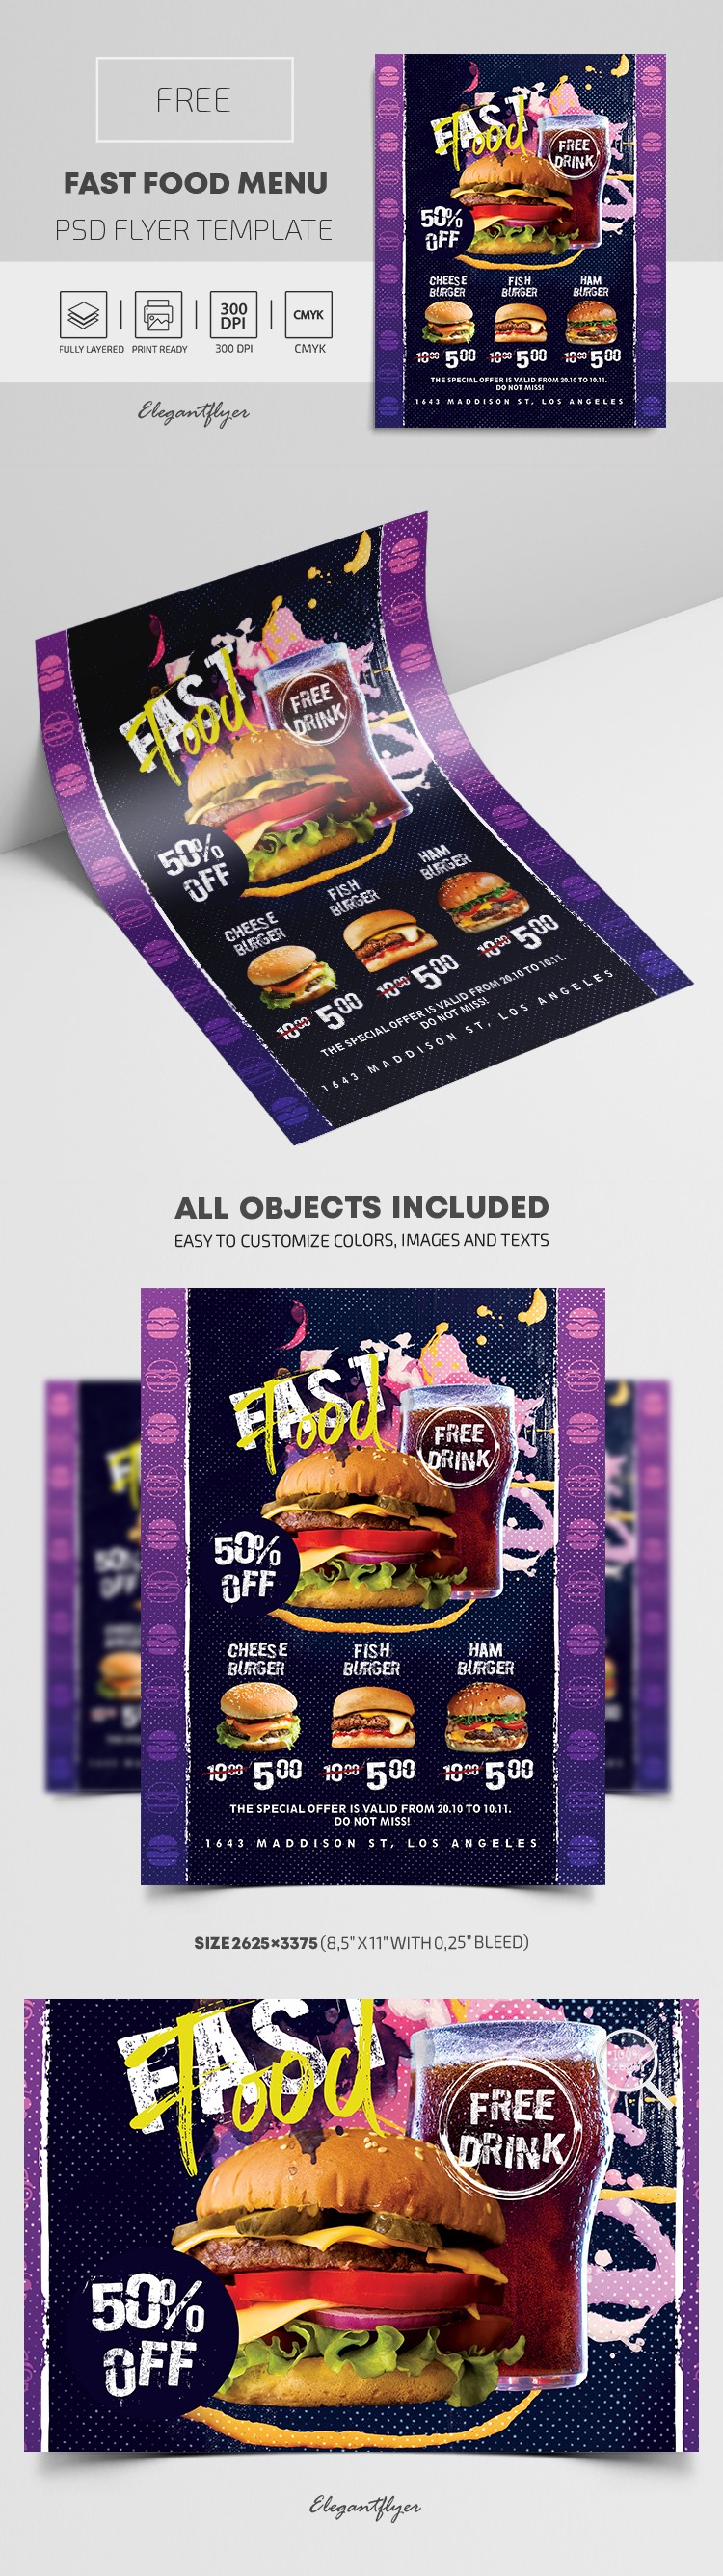 Fast Food Menu Flyer by ElegantFlyer